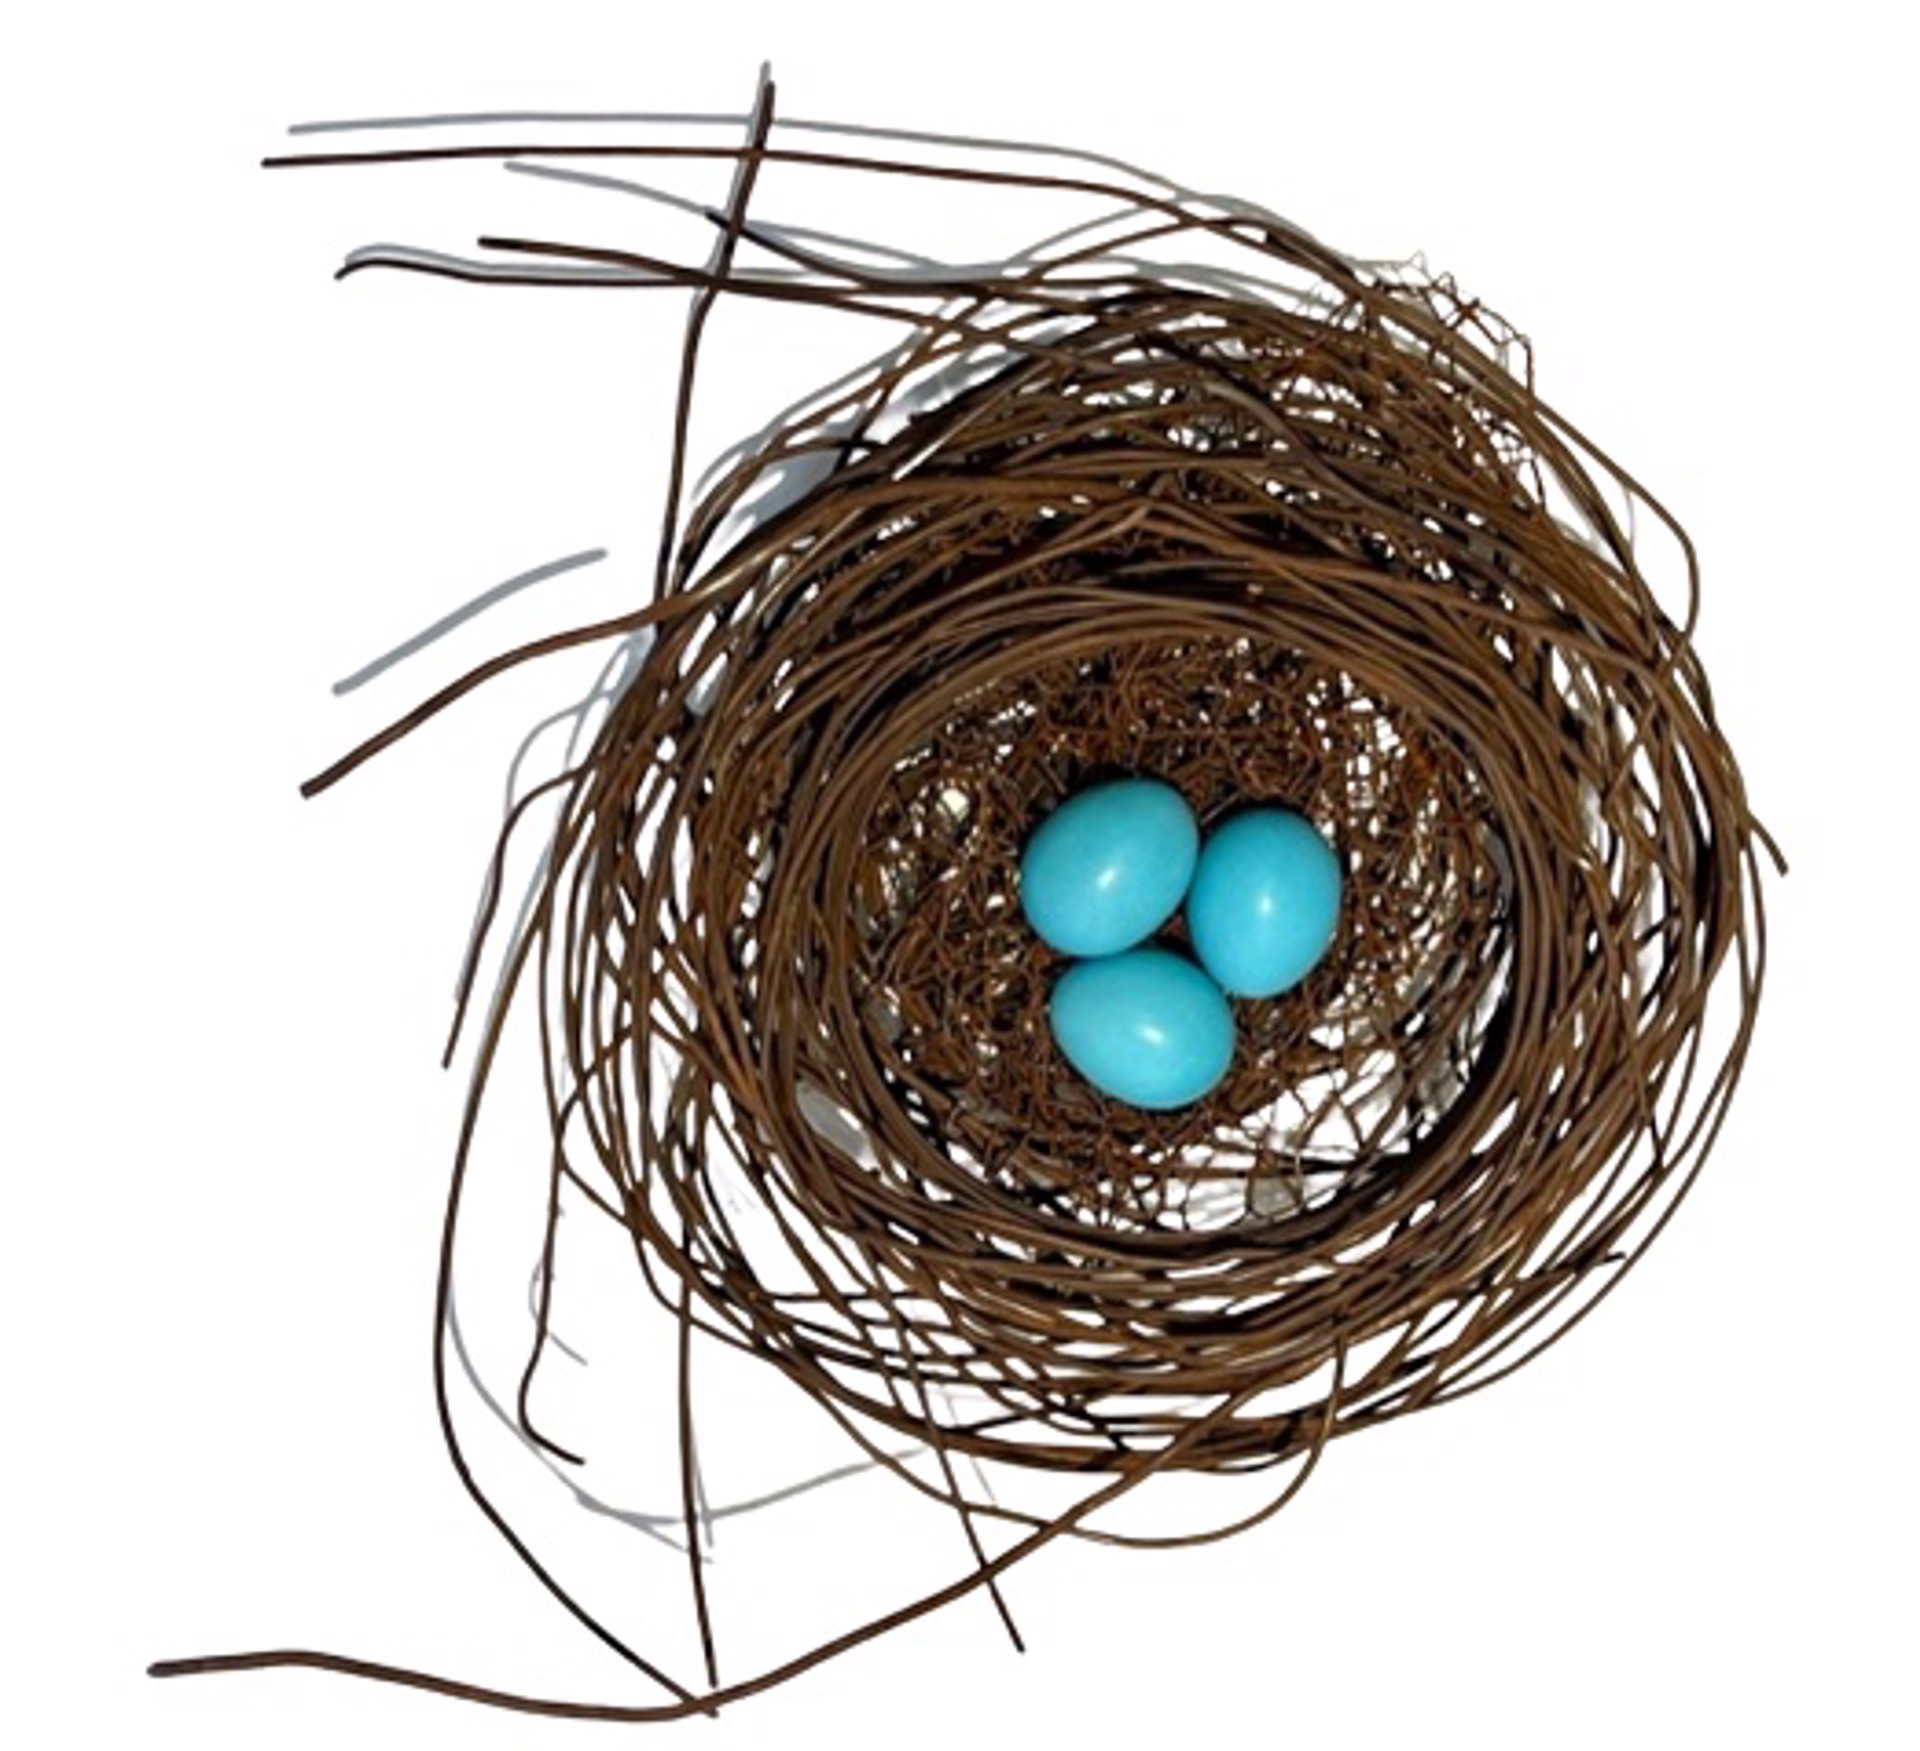 Hand Woven Wire Nest w/3 Small Blue Eggs #1376 by Phil Lichtenhan